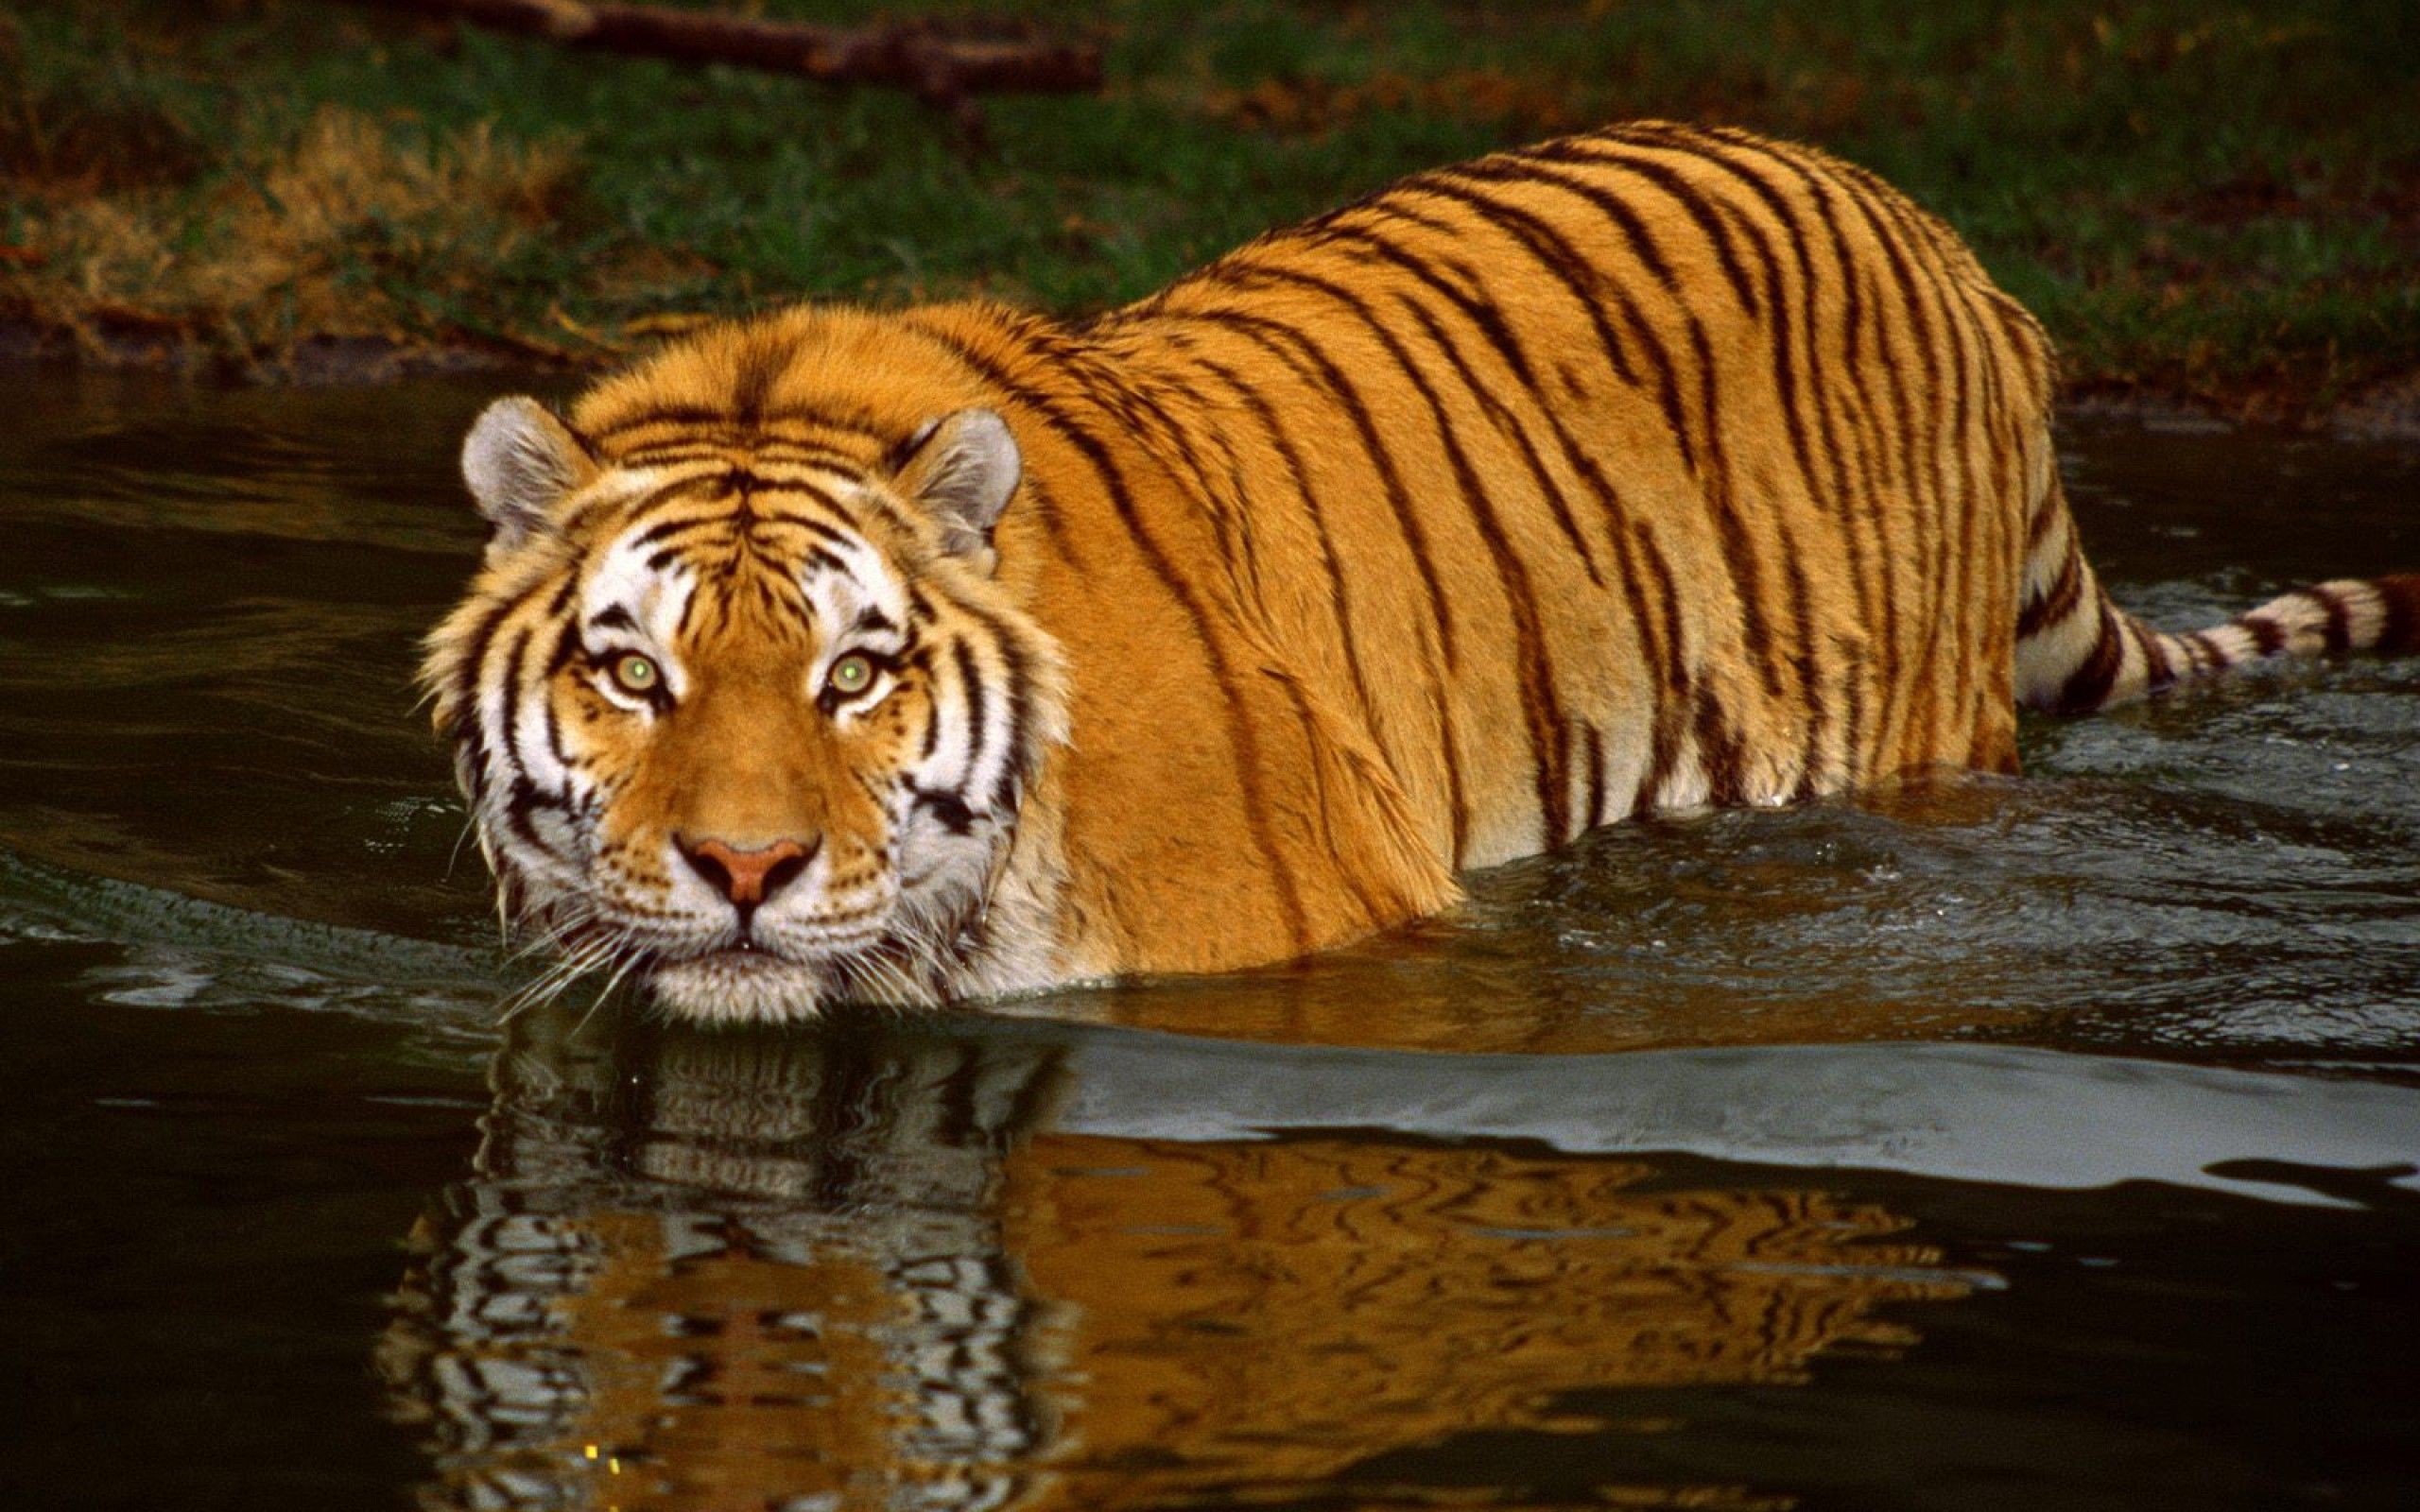 General 2560x1600 tiger animals wildlife mammals big cats in water water reflection